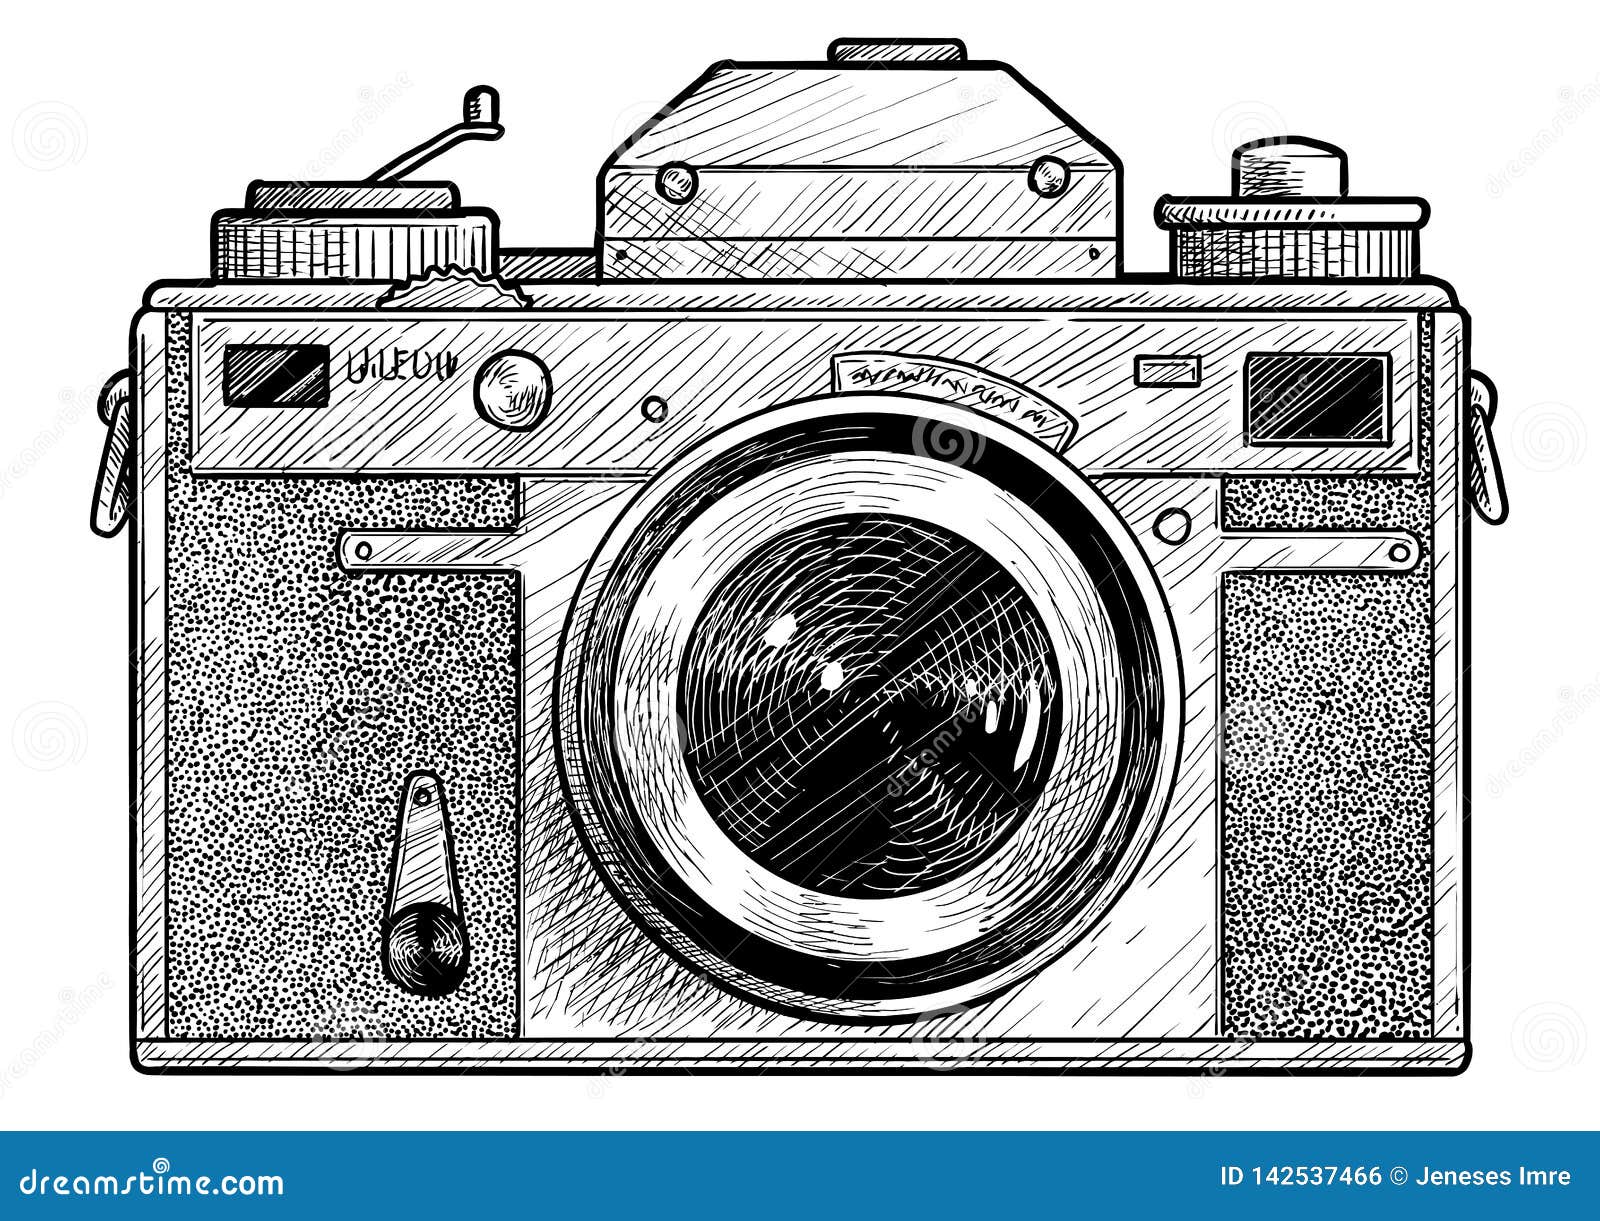 Nikon camera illustration Drawing Camera Sketch graph angle vintage  Camera monochrome png  PNGWing